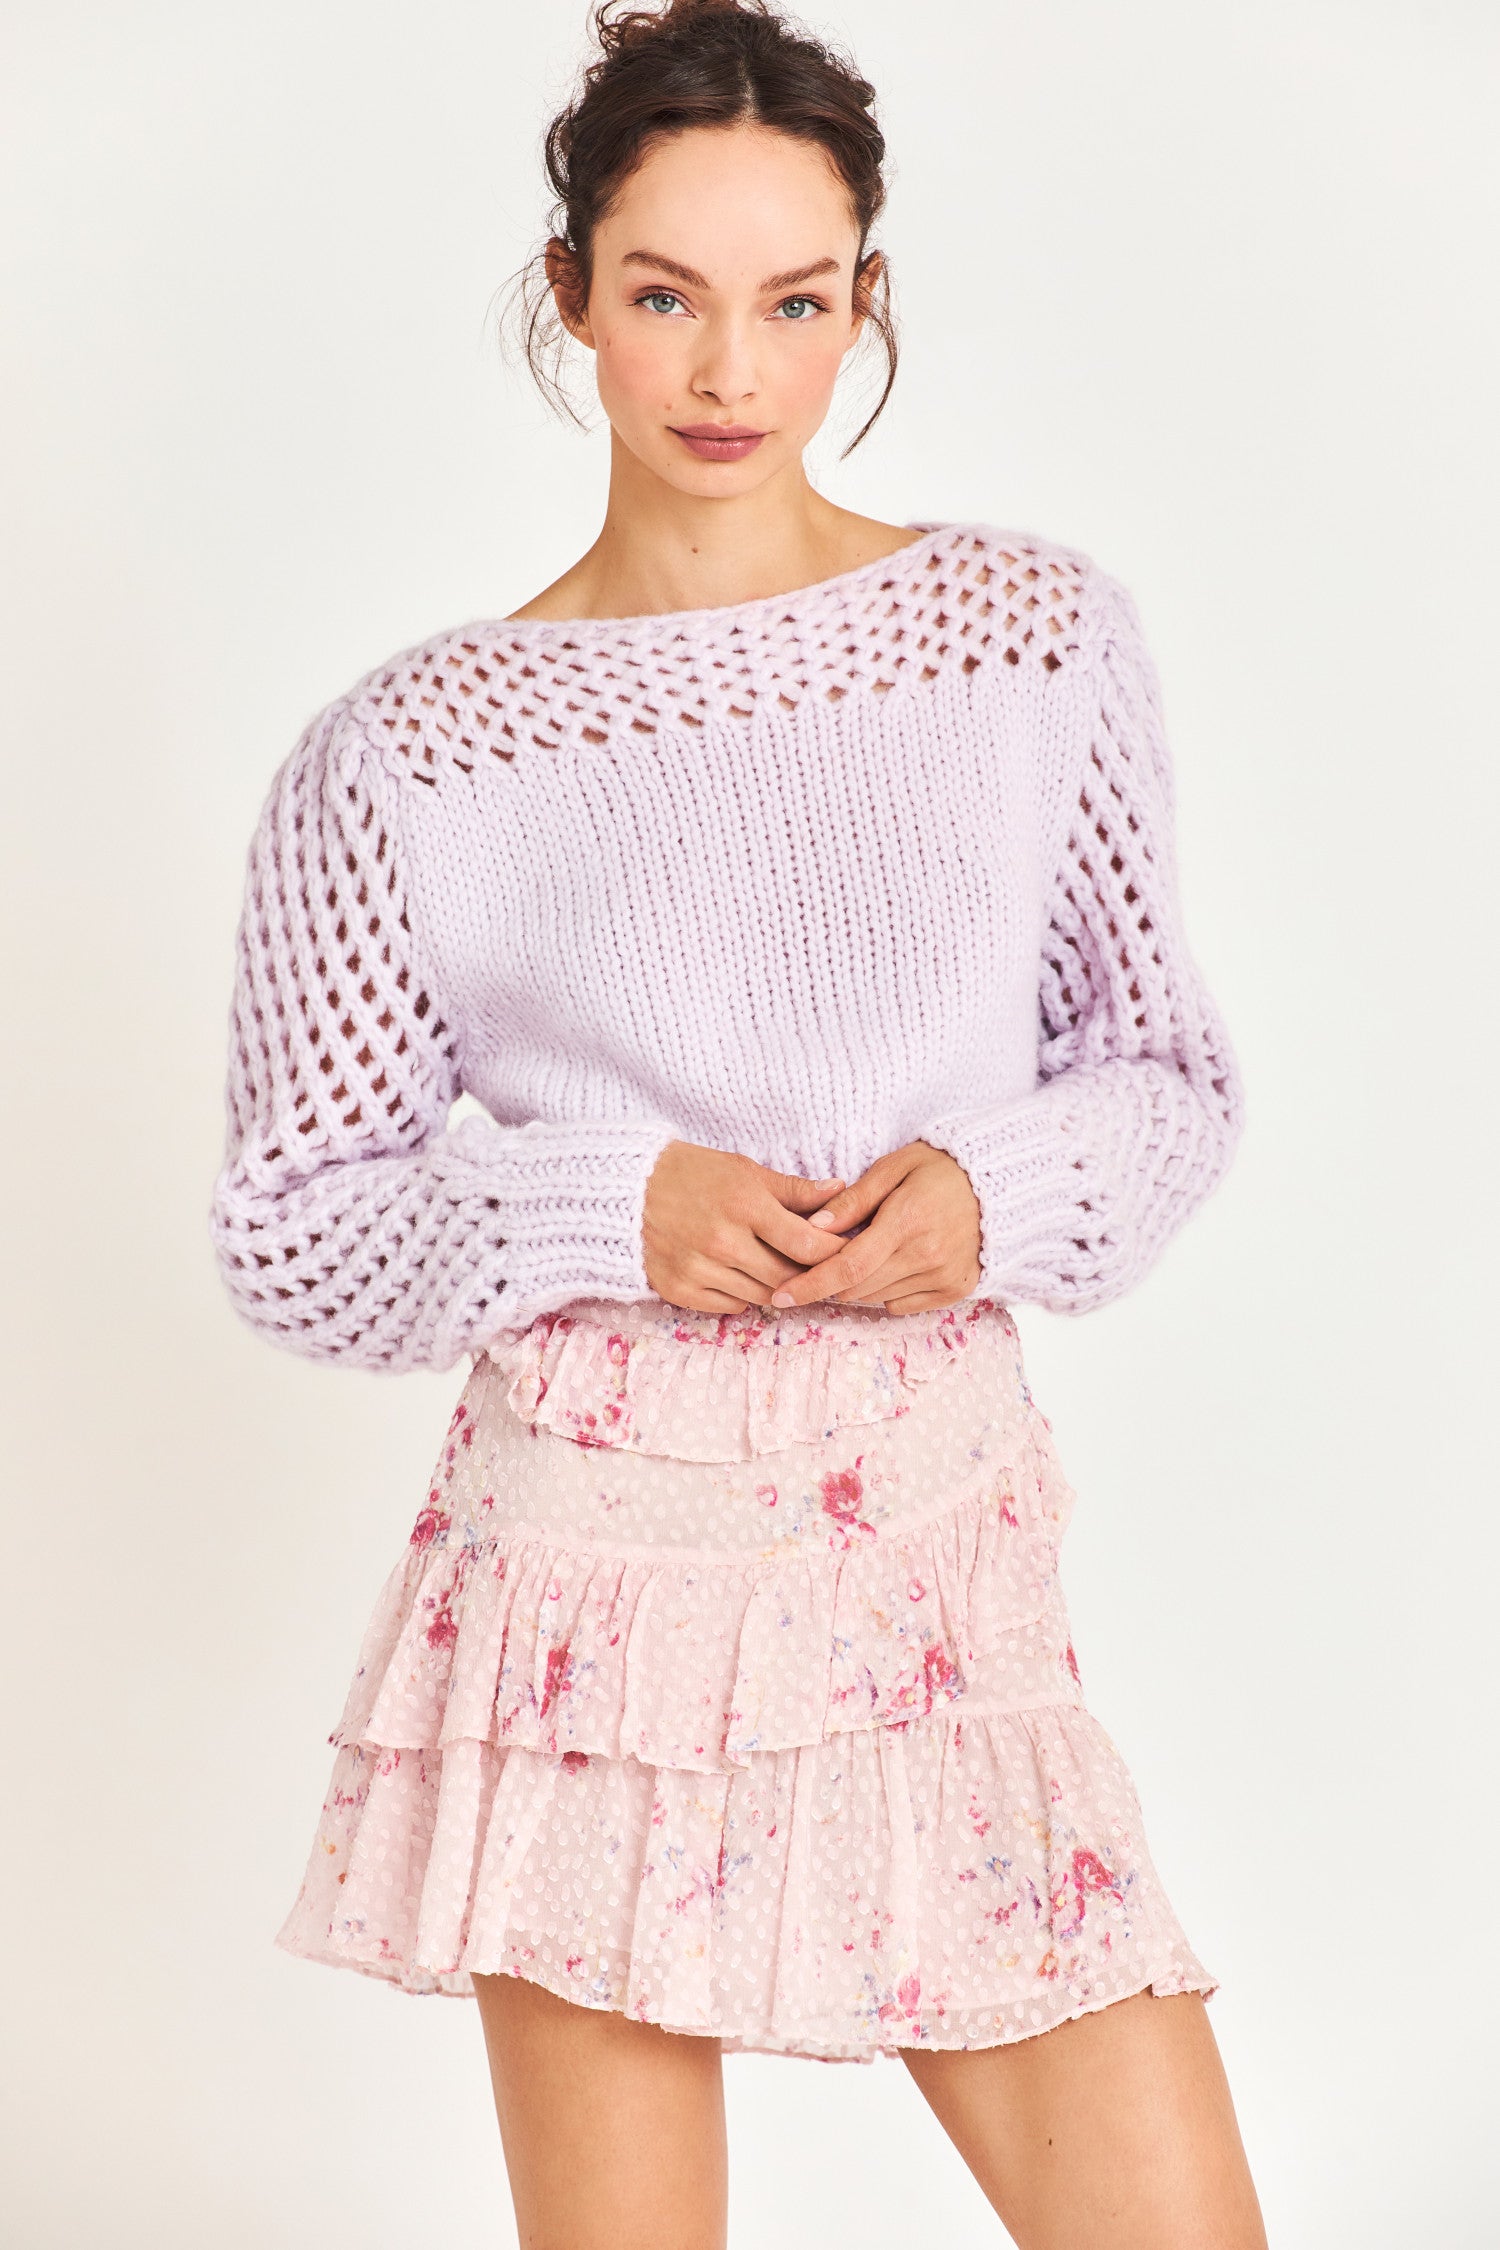 Model wearing pink mini skirt